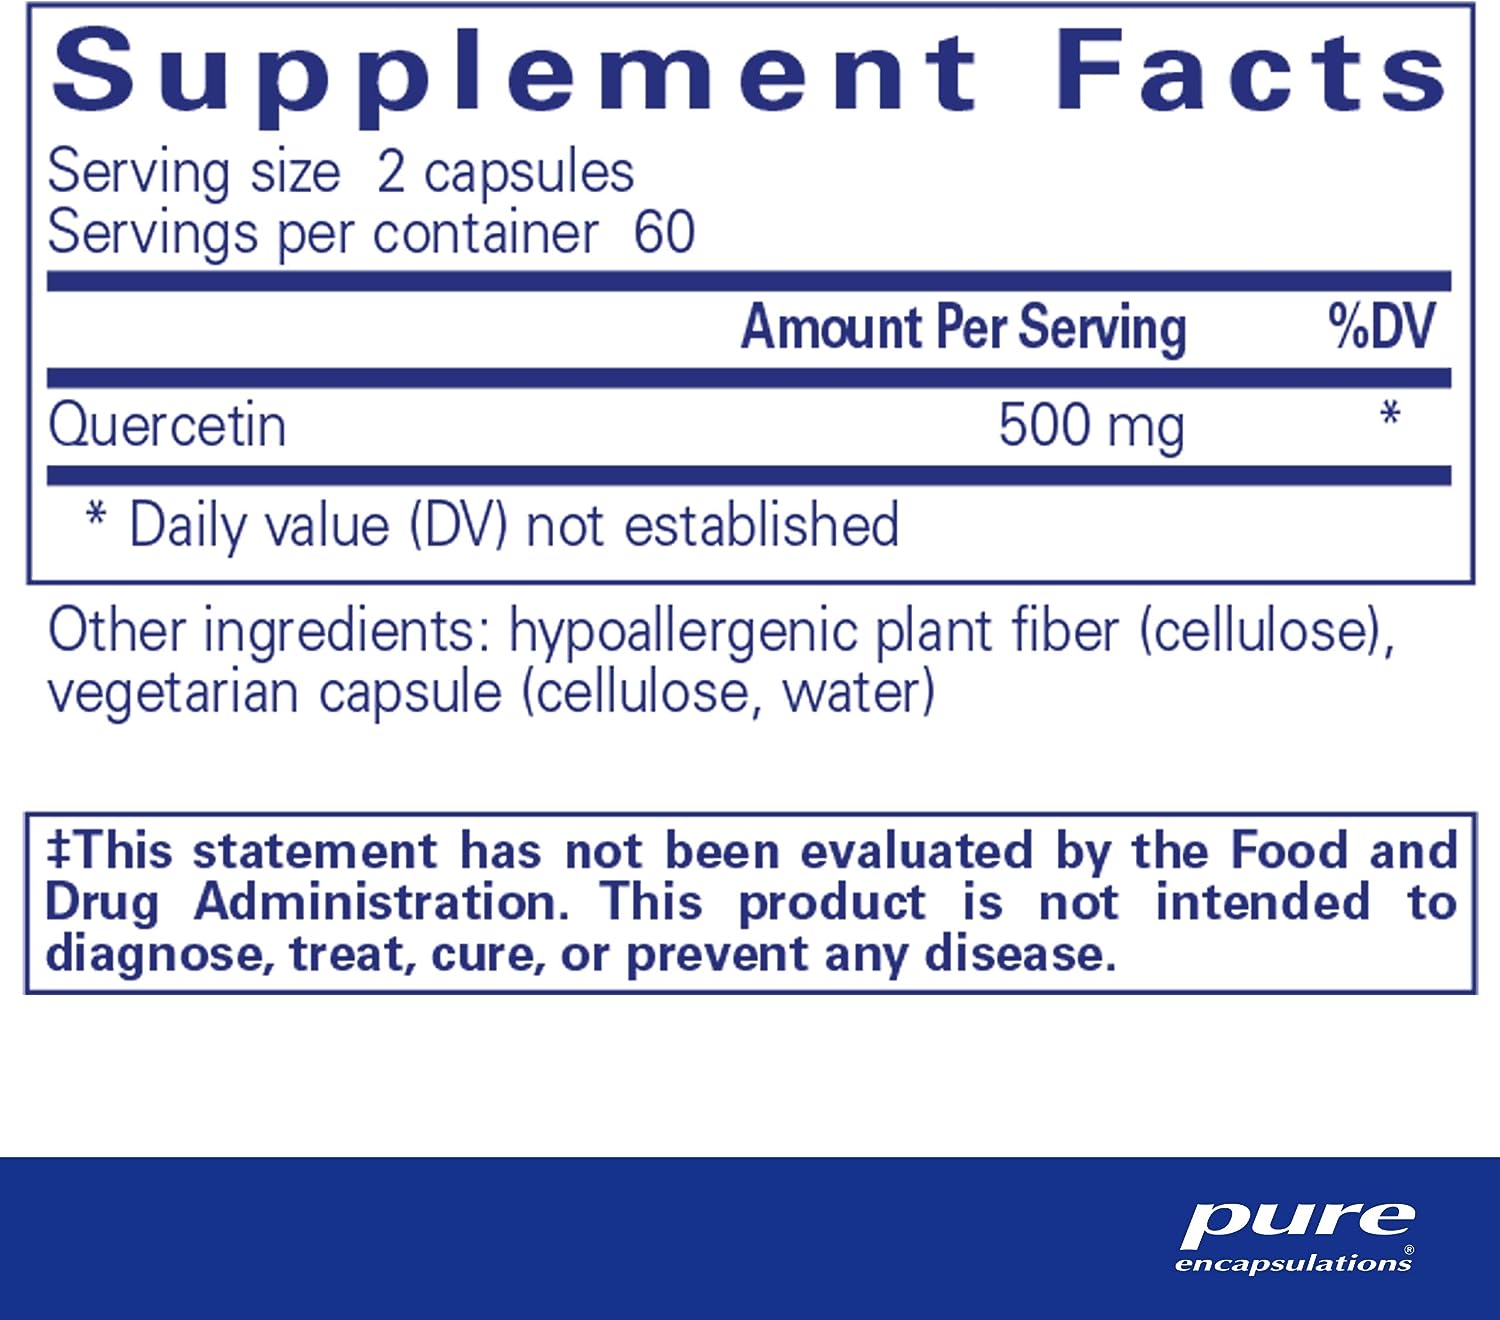 Pure Encapsulations Quercetin - Supplement with Bioflavonoids for Immune, Cellular, and Cardiometabolic Health* - with Premium Quercetin Flavonoids - 120 Capsules